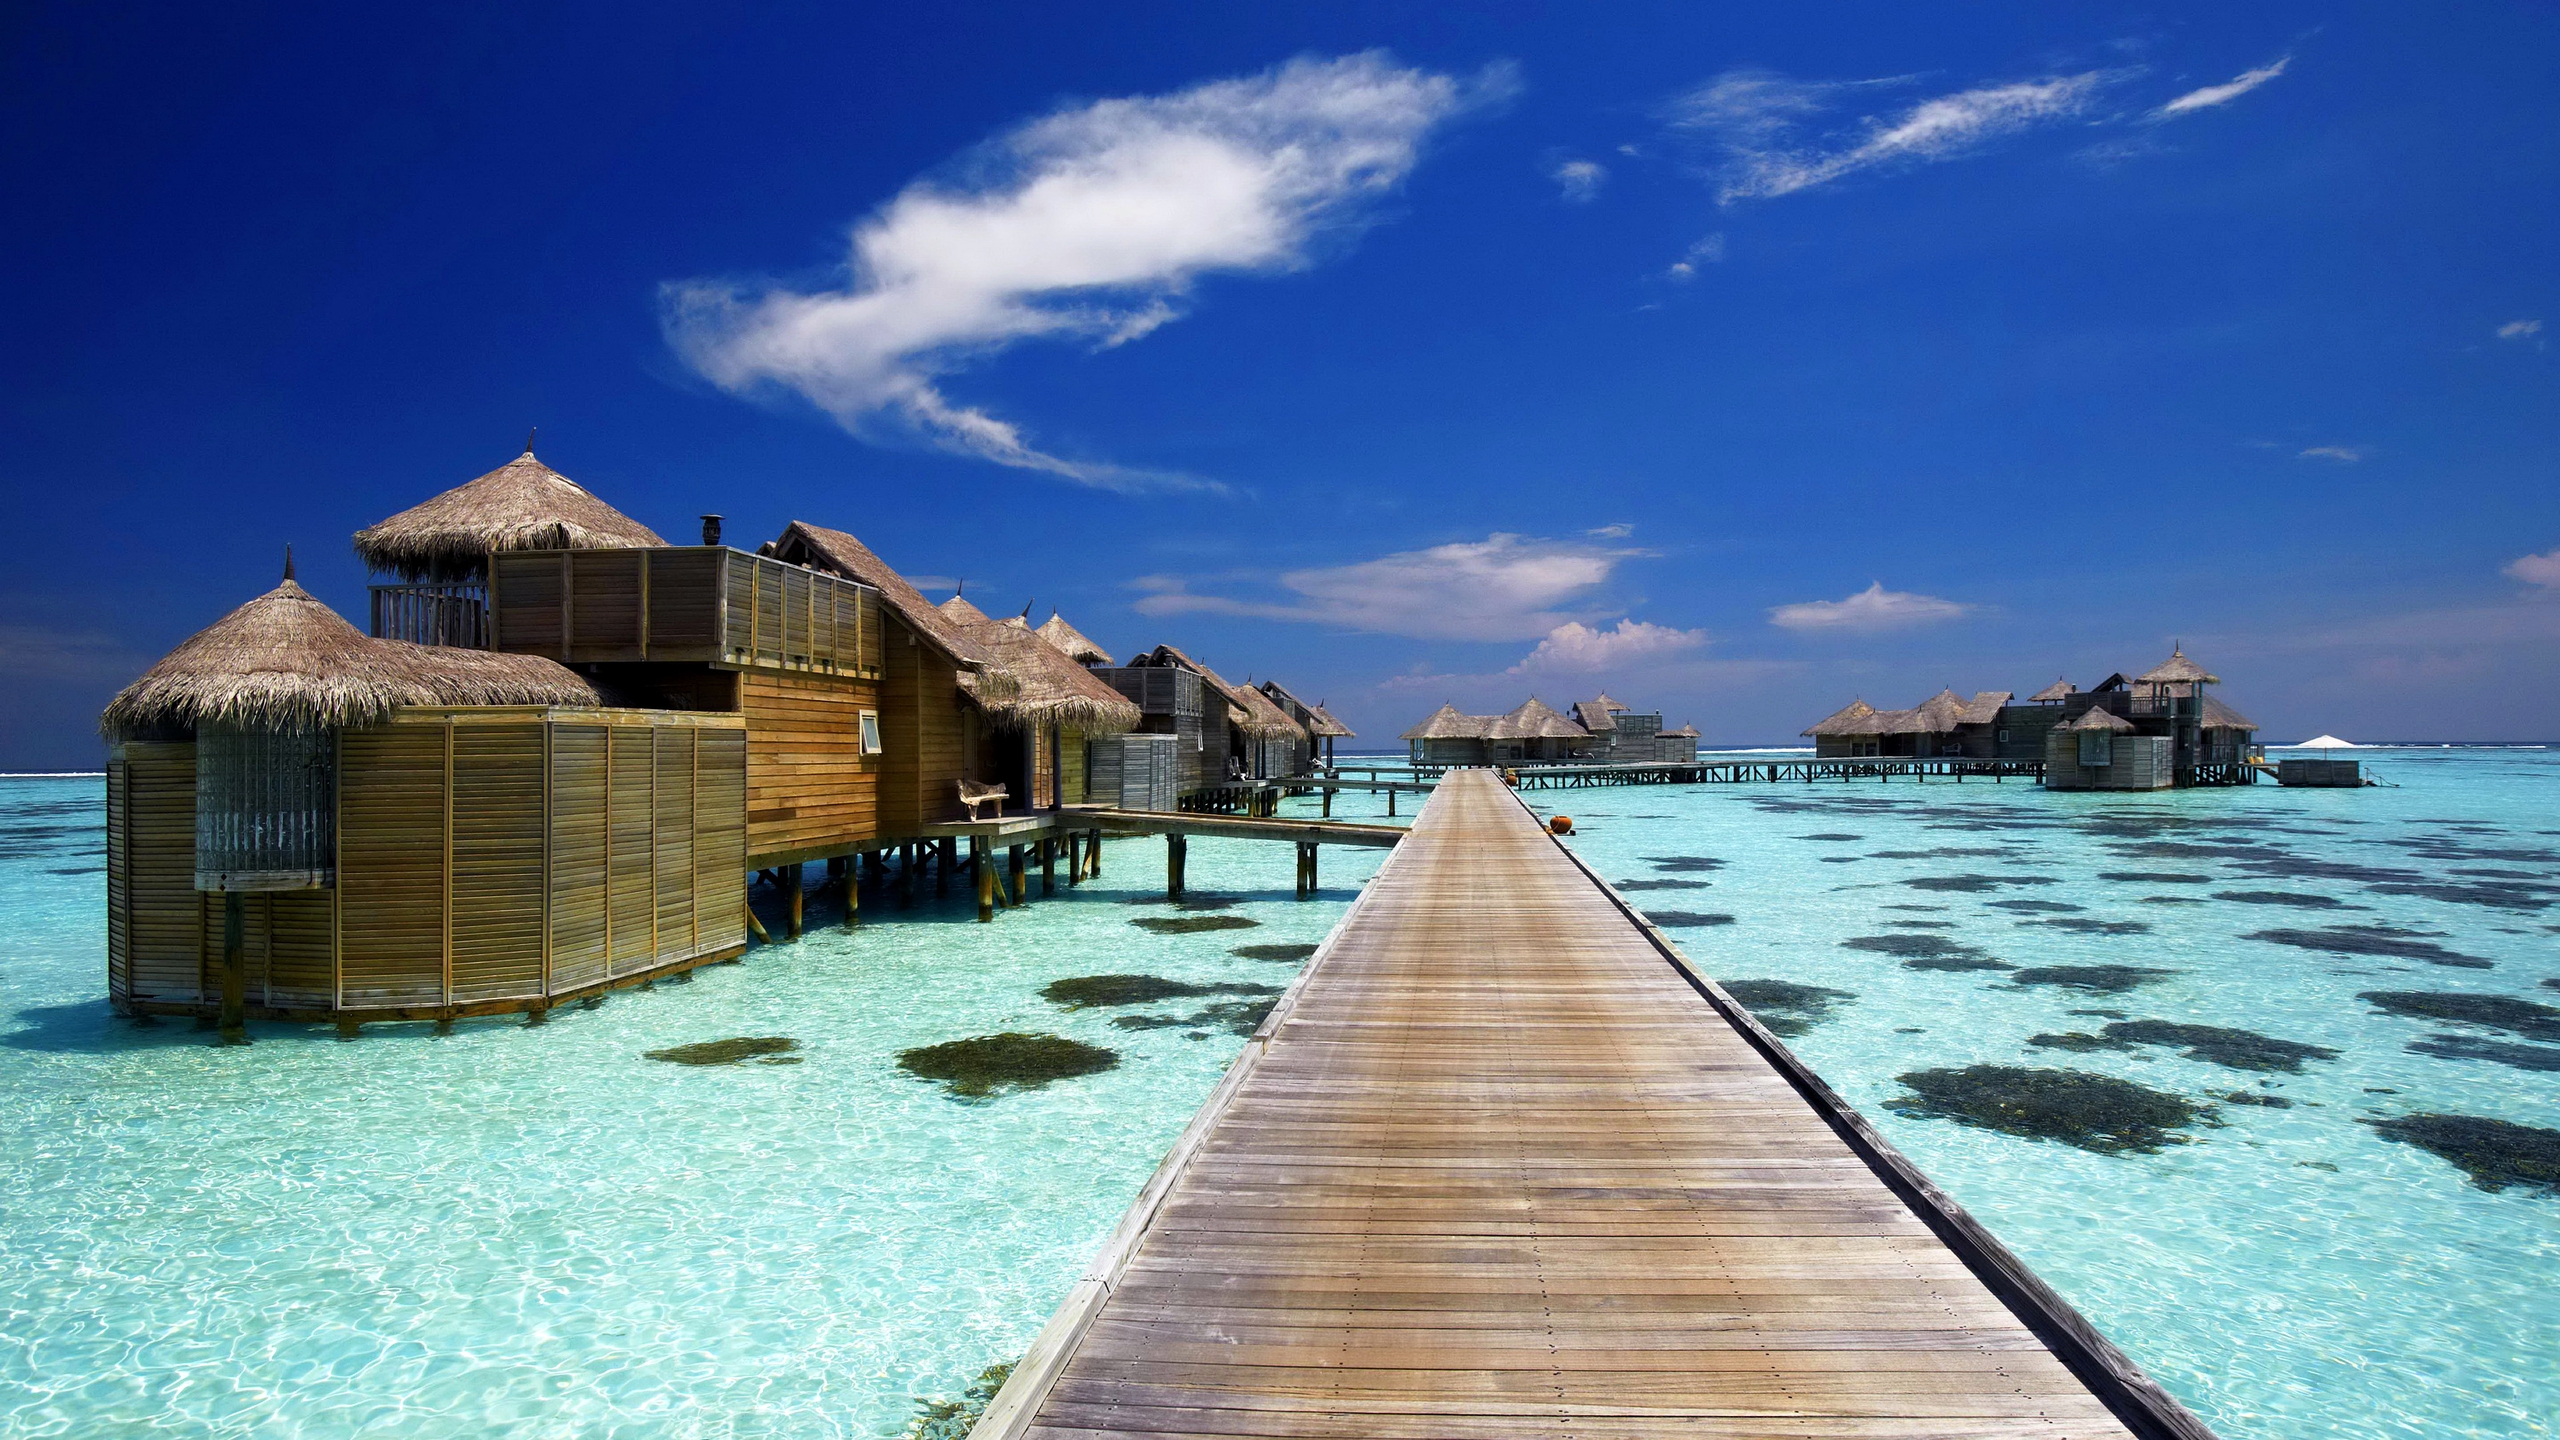 Luxury Resort in Maldives for 2560x1440 HDTV resolution